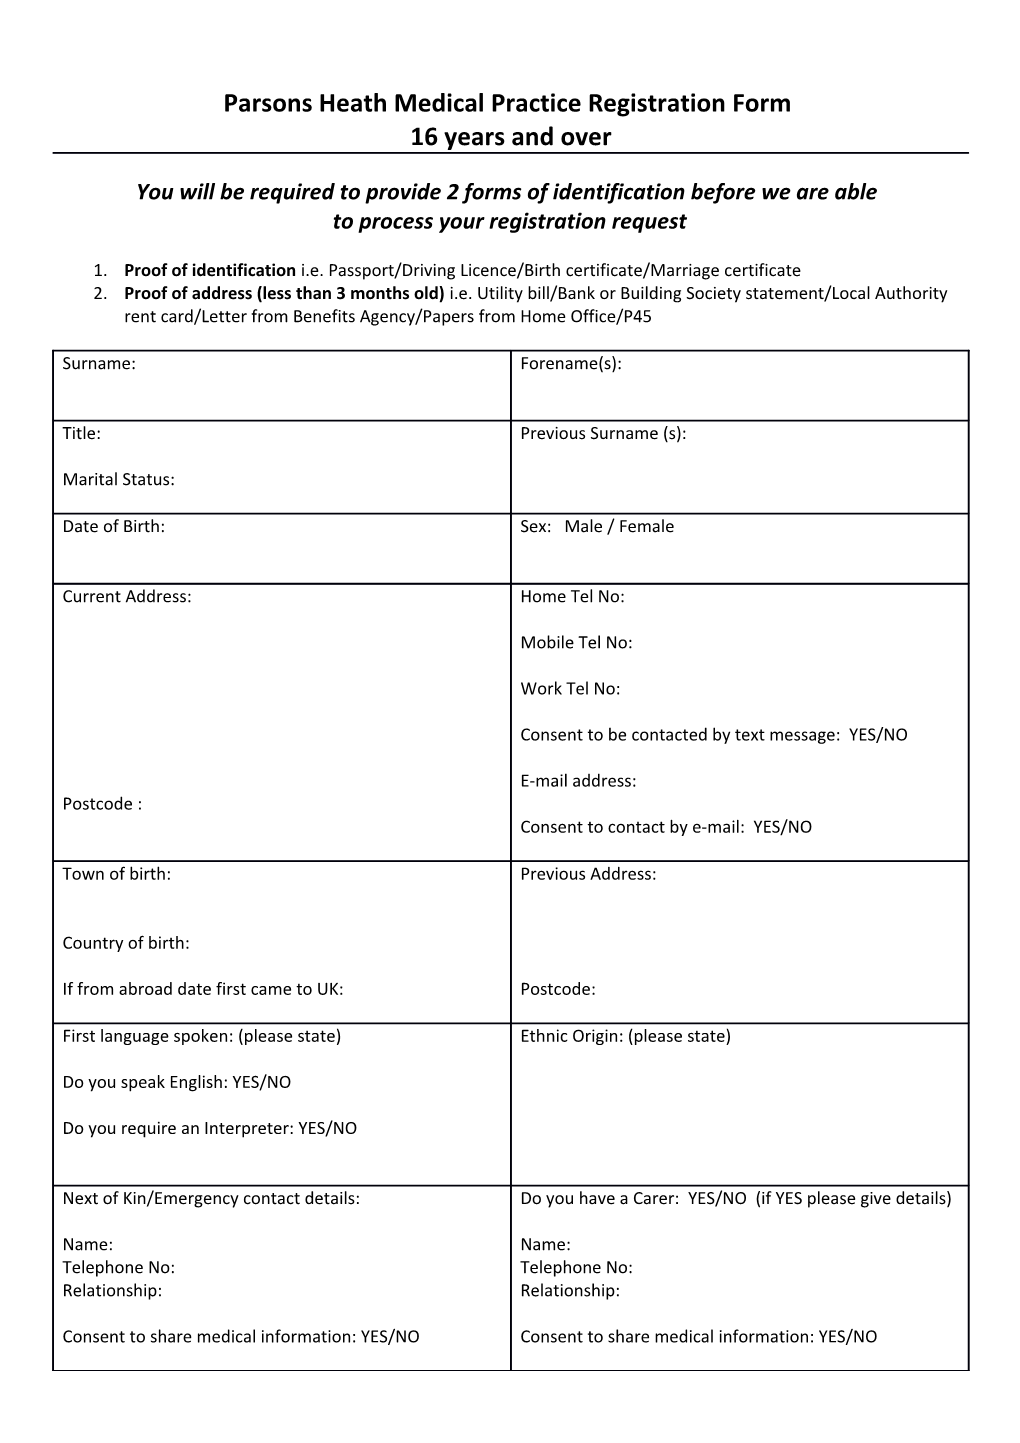 Parsons Heath Medical Practice Registration Form